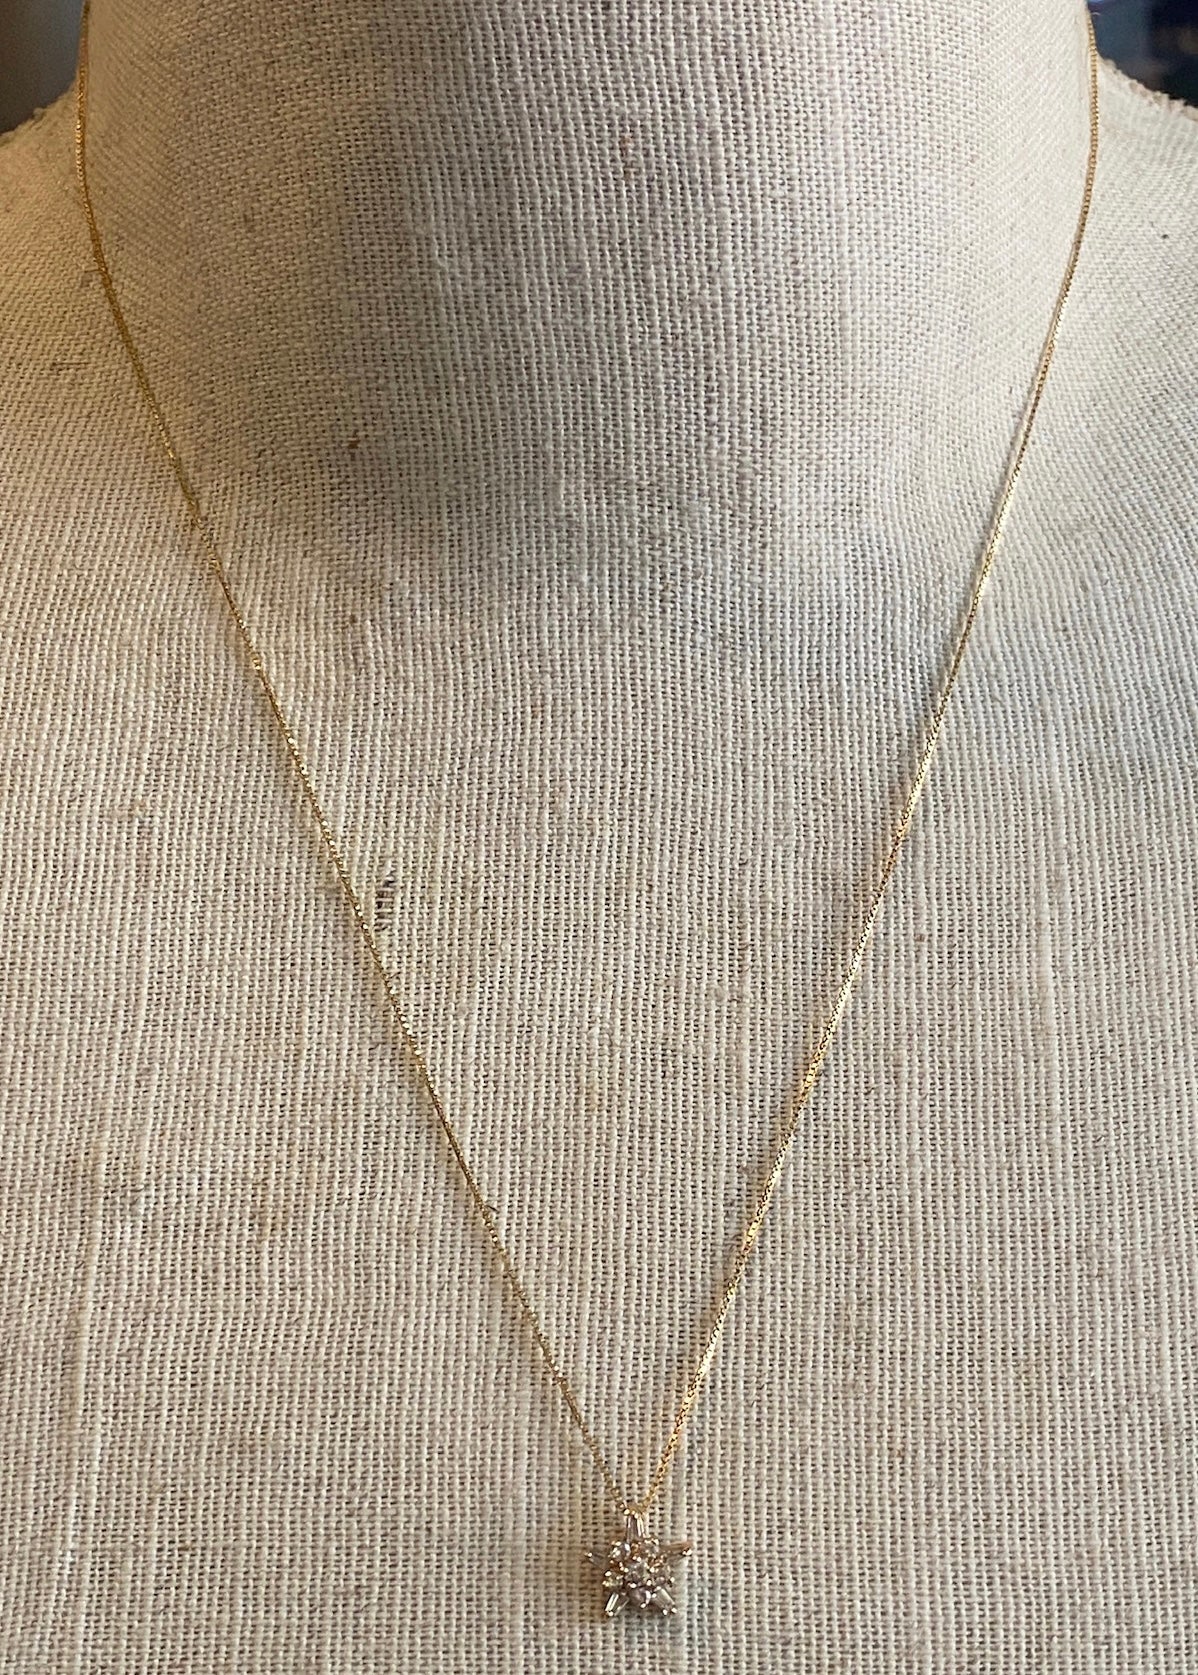 14k Yellow Gold Round Baguette .25ctw Diamond Star Pendant Necklace